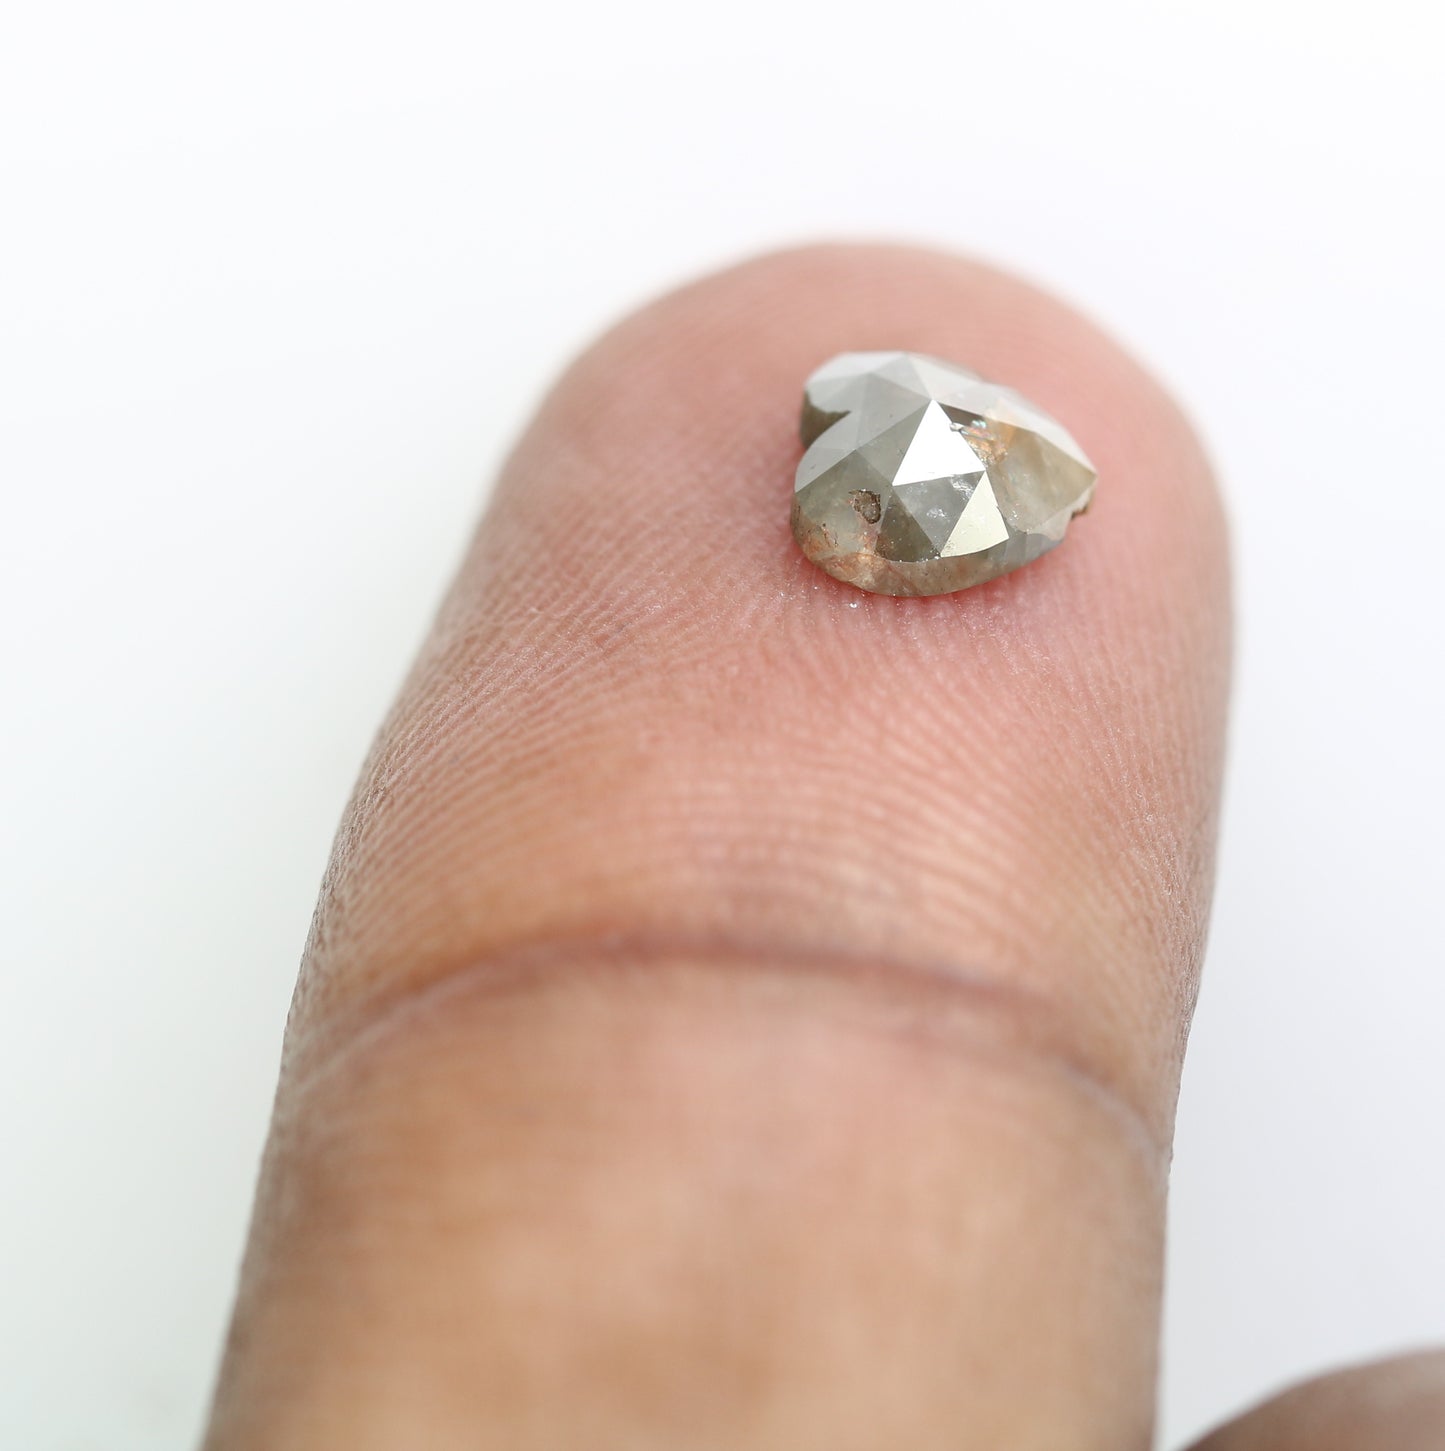 0.89 Carat 6.10 MM Heart Shape Fancy Grey Diamond For Engagement Ring